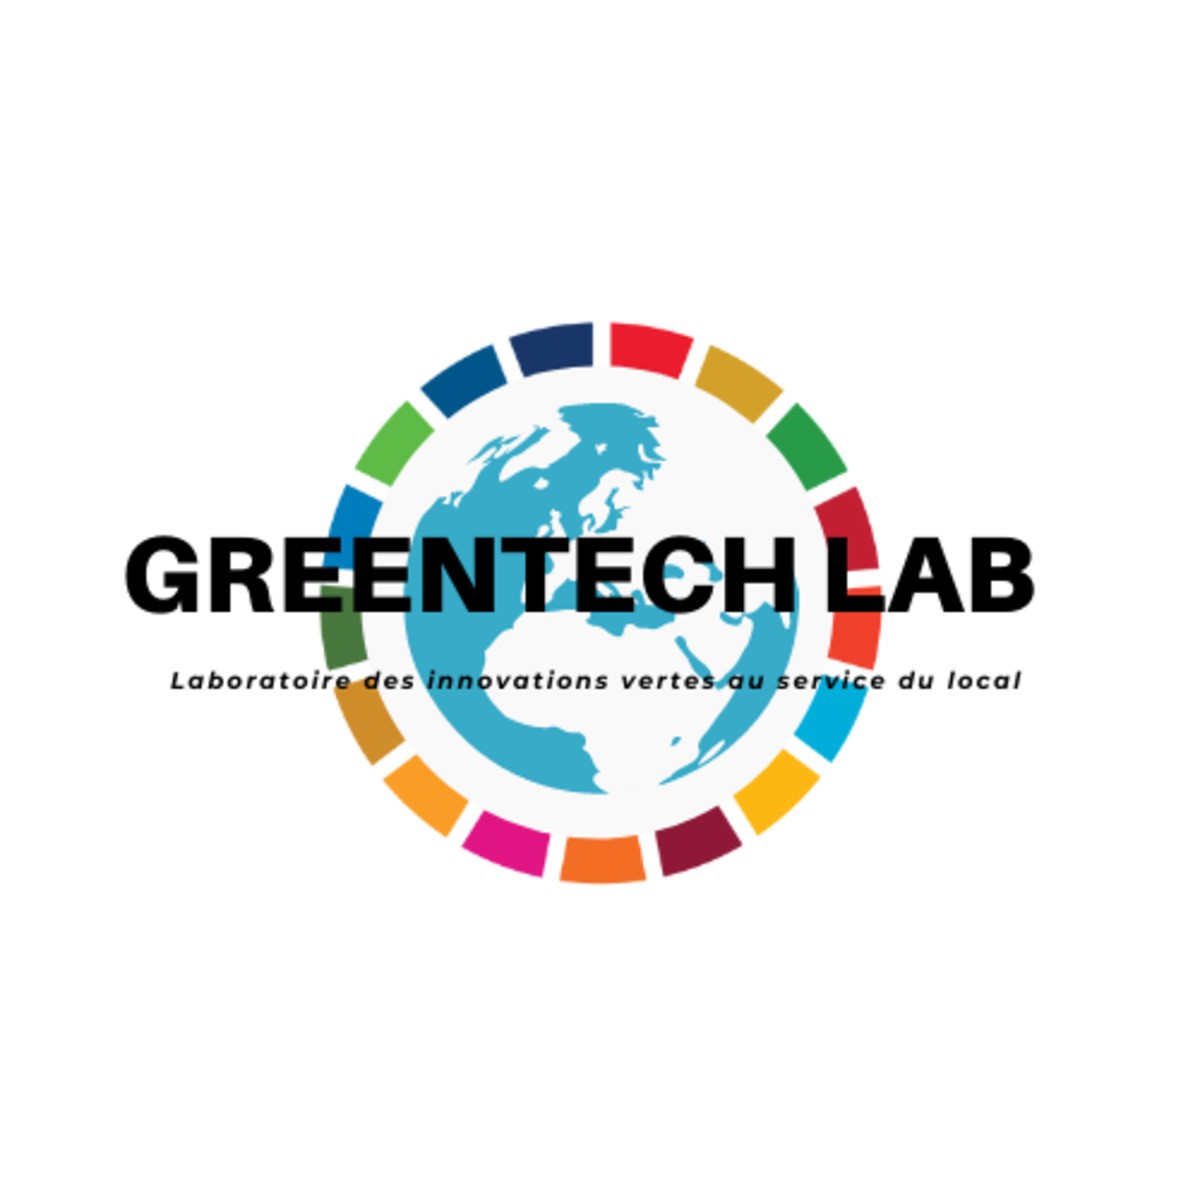 Greentechlab